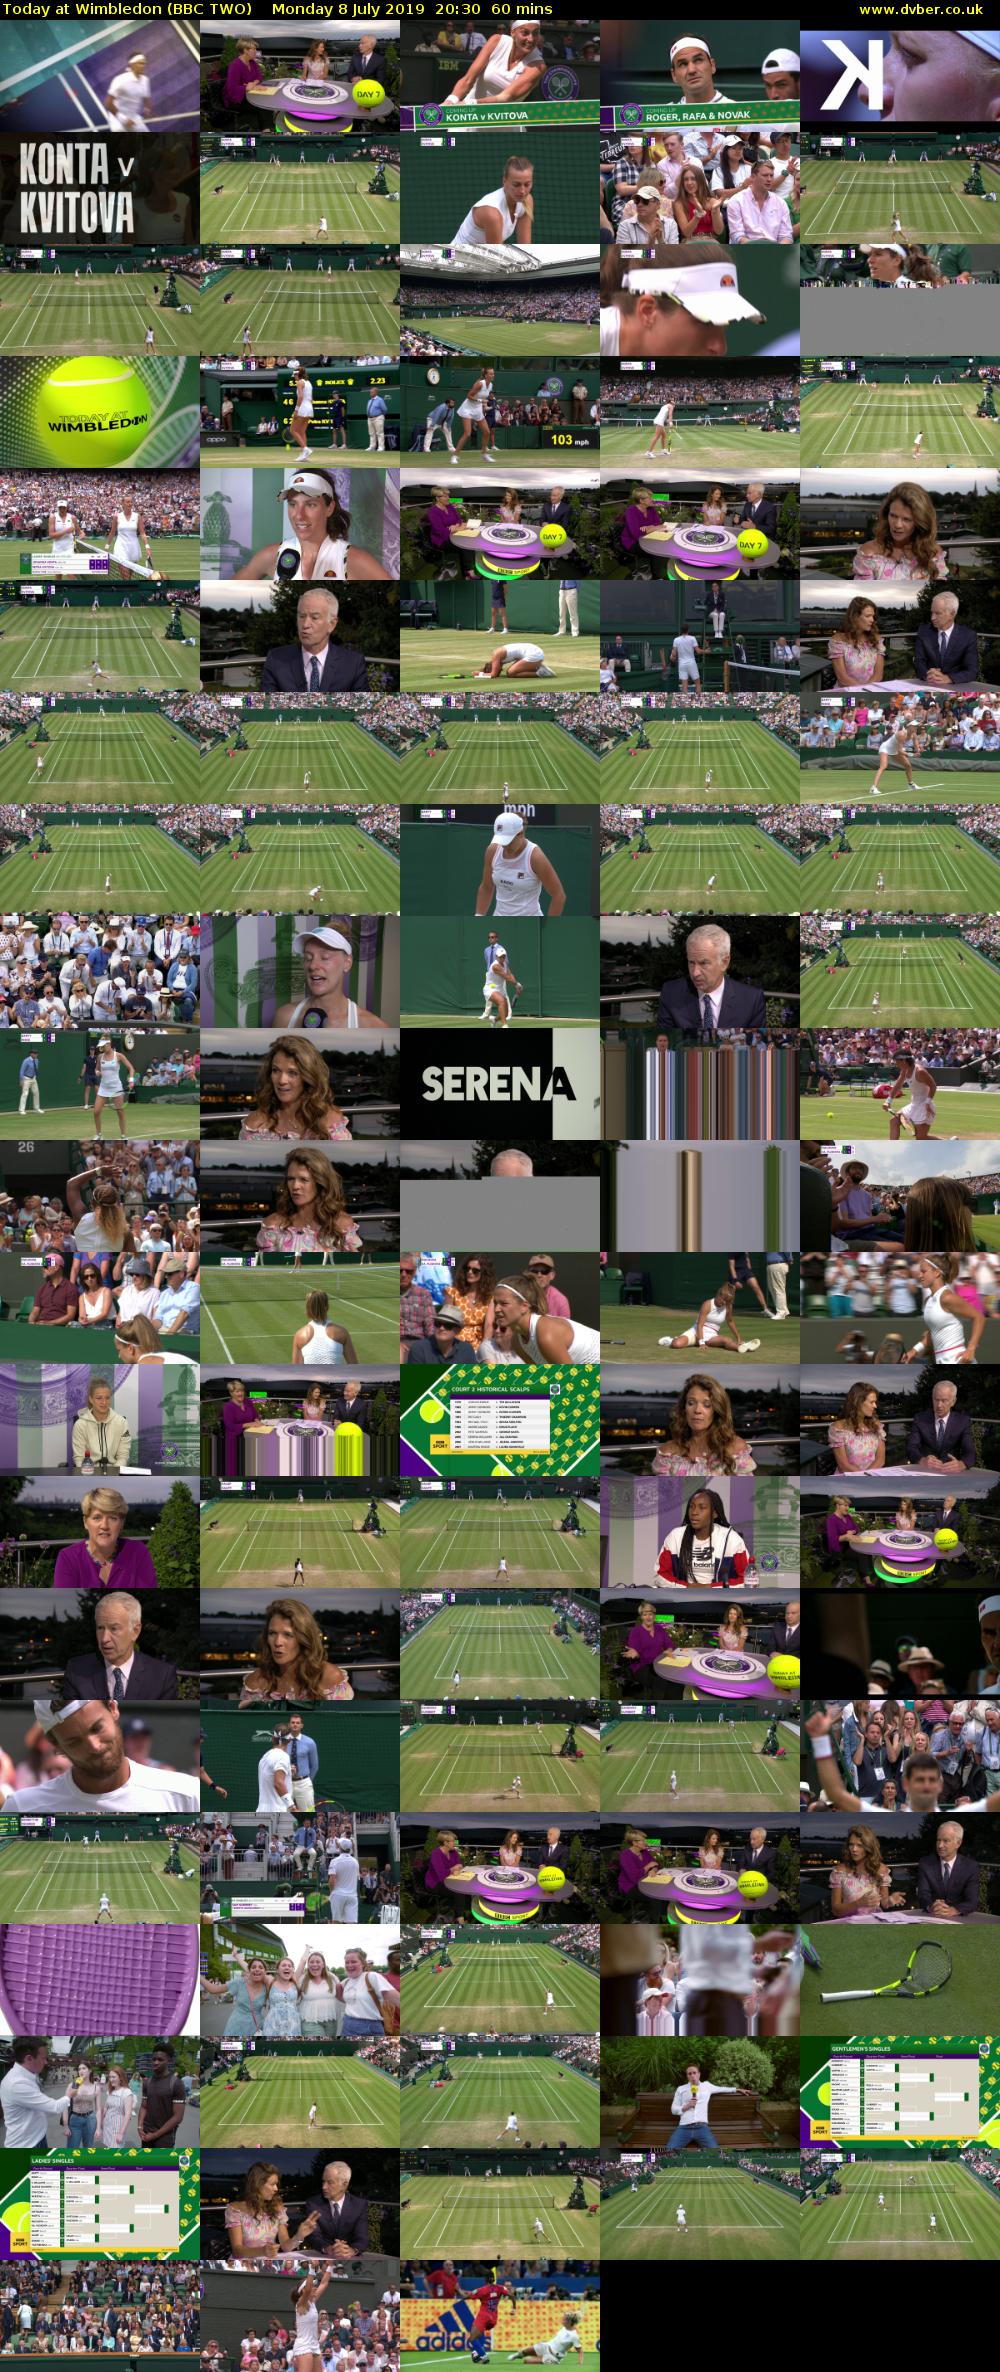 Today at Wimbledon (BBC TWO) Monday 8 July 2019 20:30 - 21:30